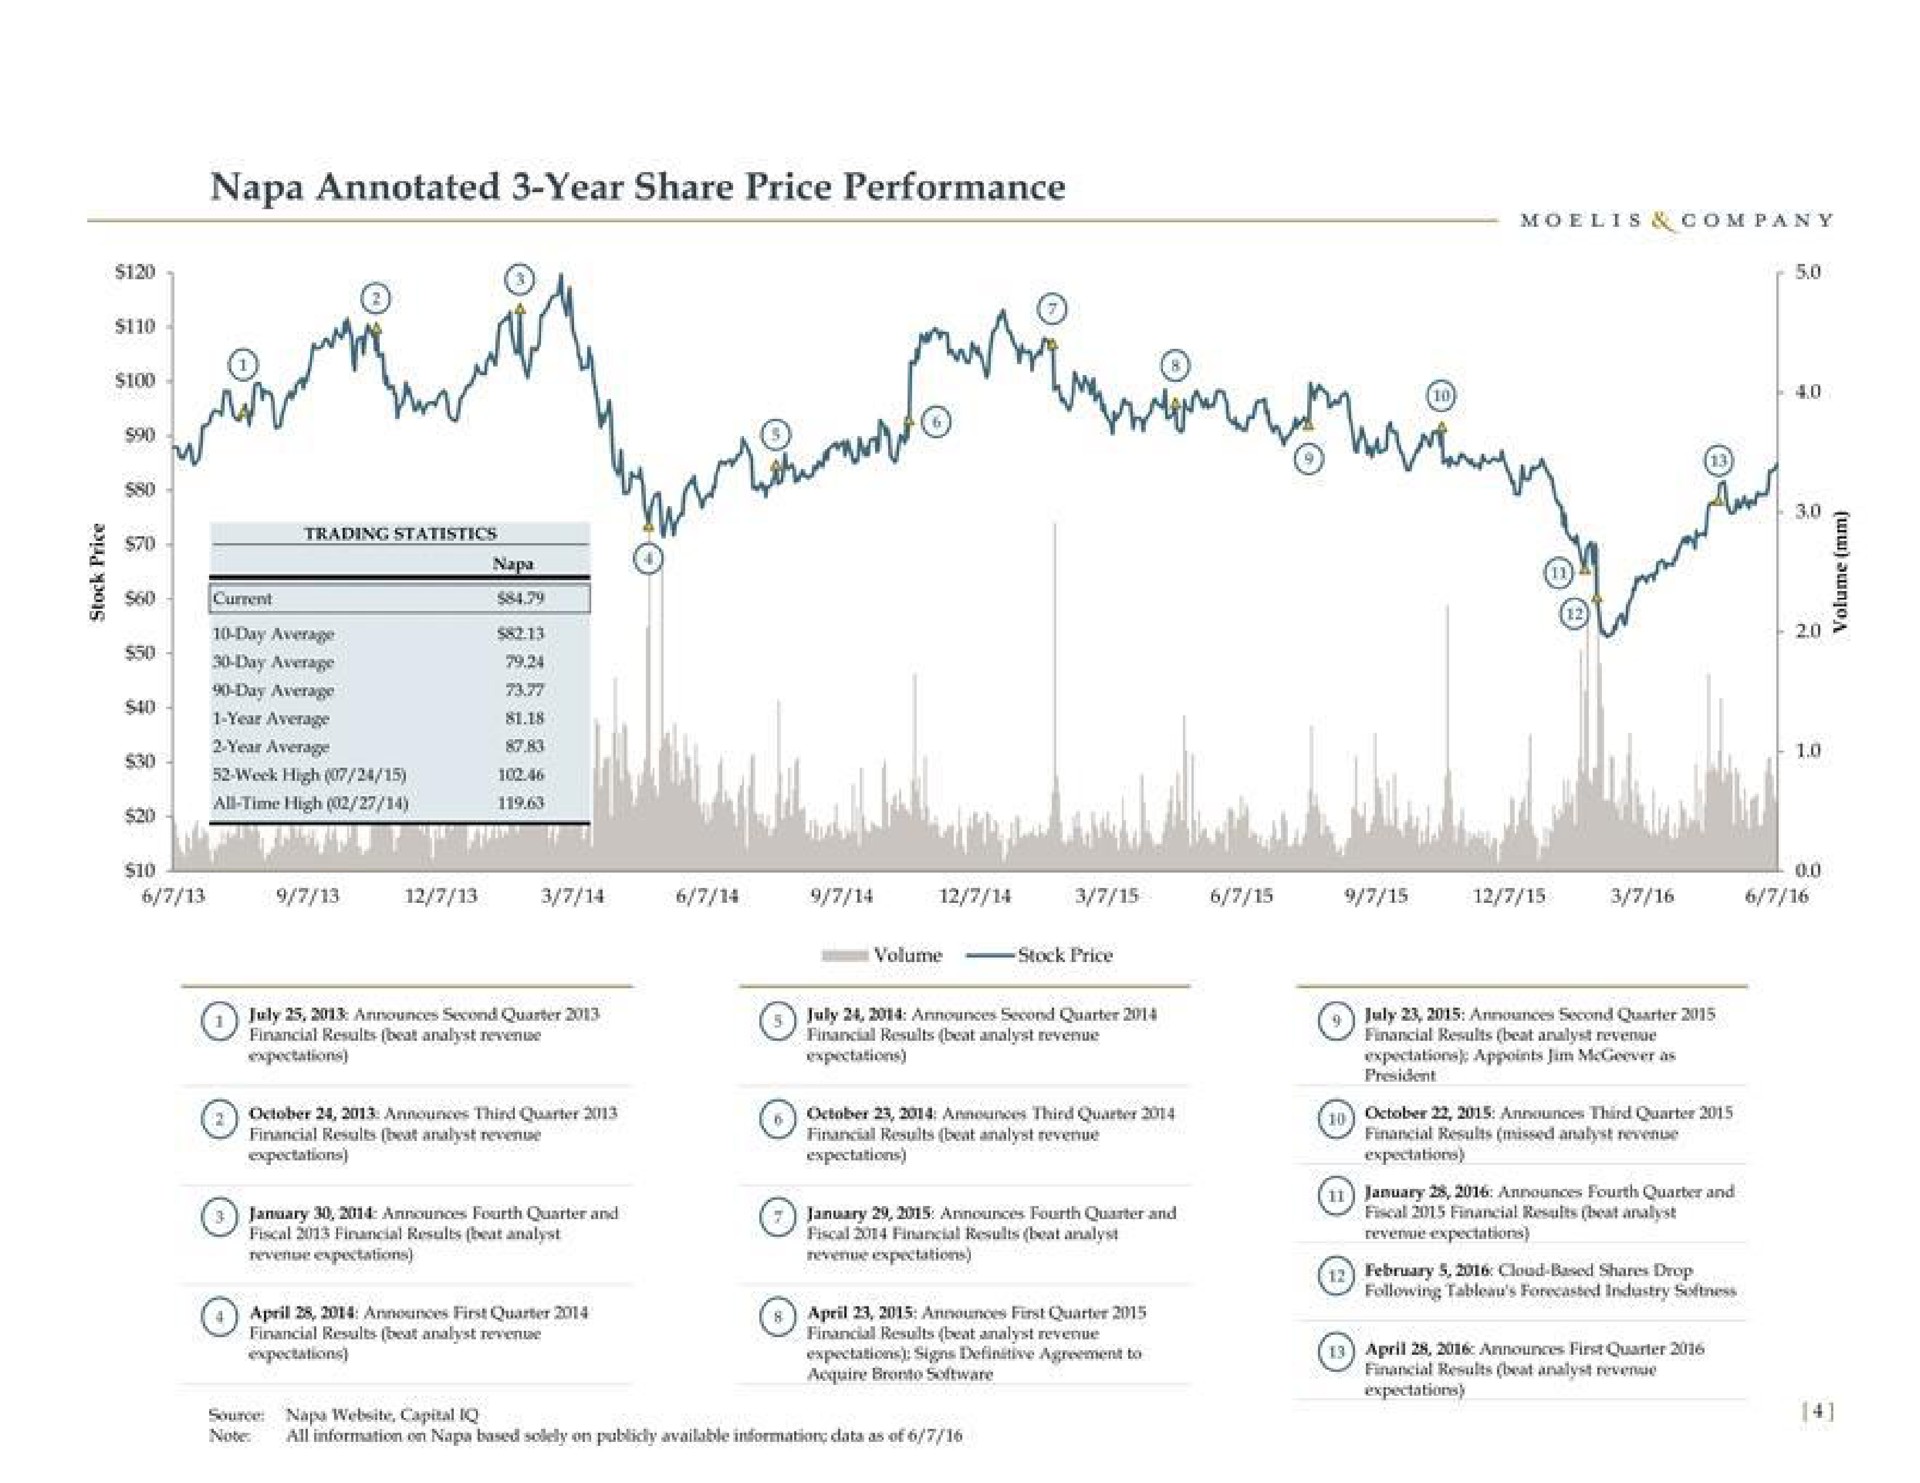 napa annotated year share price performance i trading statistics i | Moelis & Company